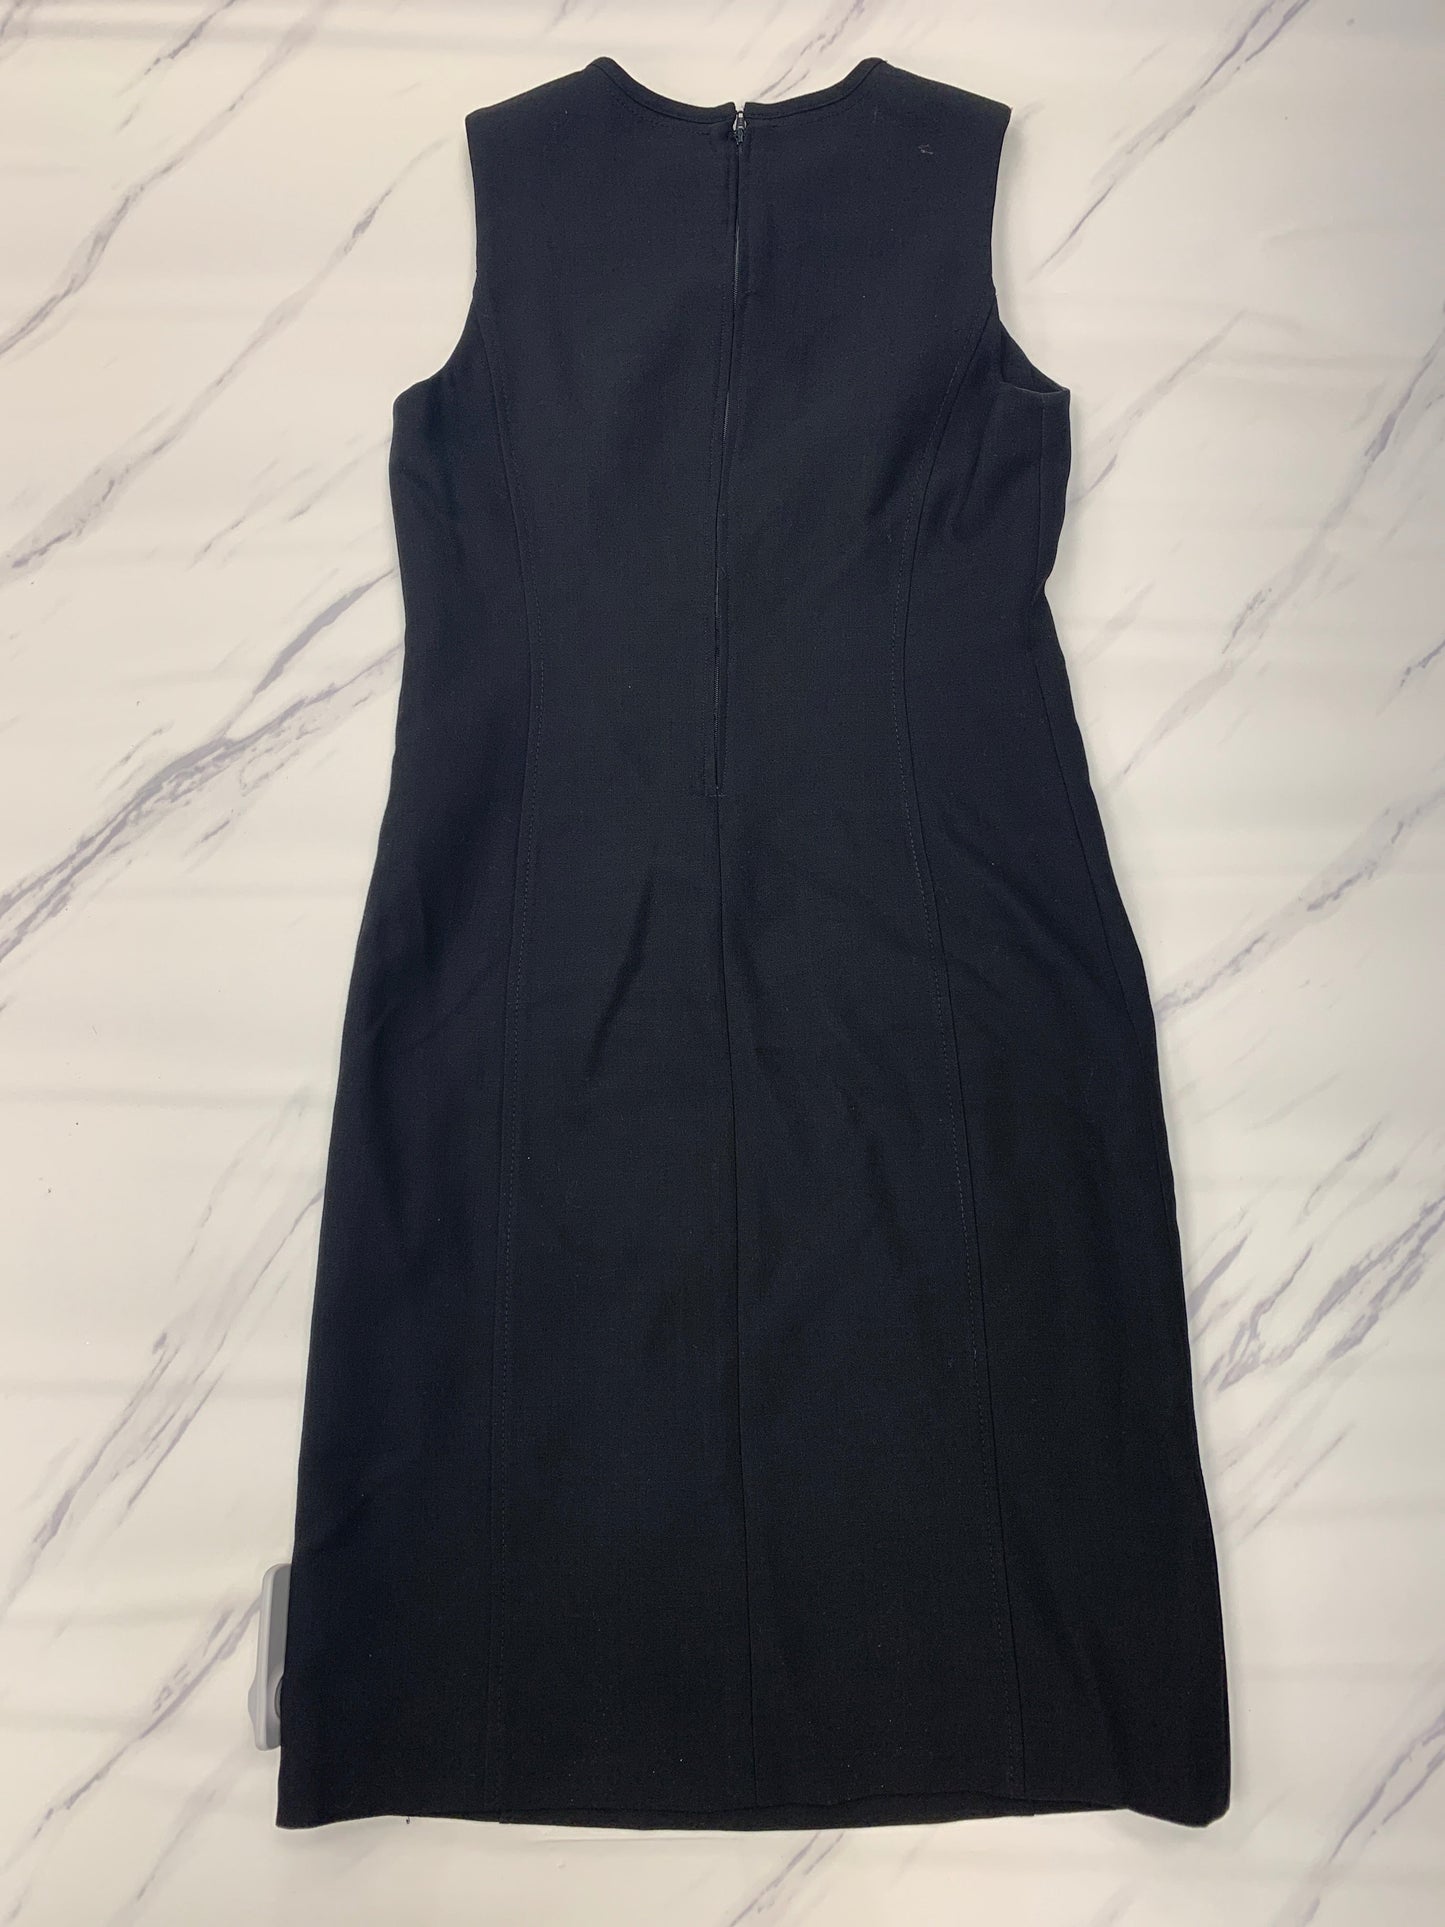 Black Dress Casual Midi Tory Burch, Size 6